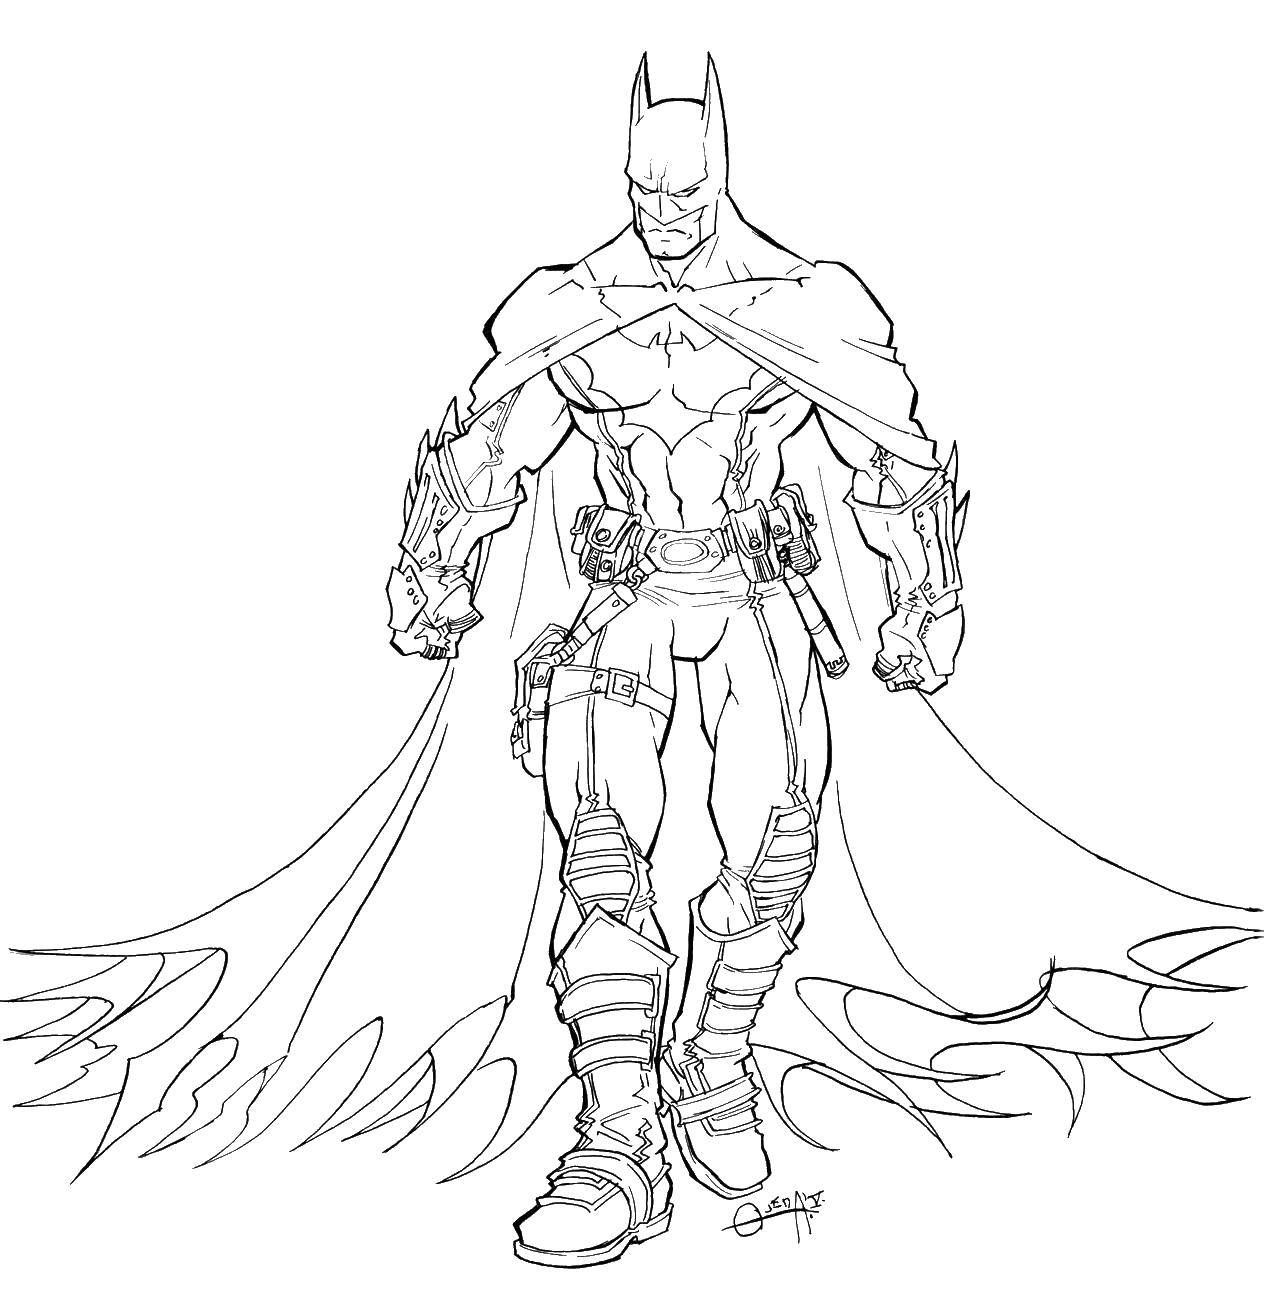 Coloring Batman with the Cape. Category superheroes. Tags:  Batman, Cape, mask.